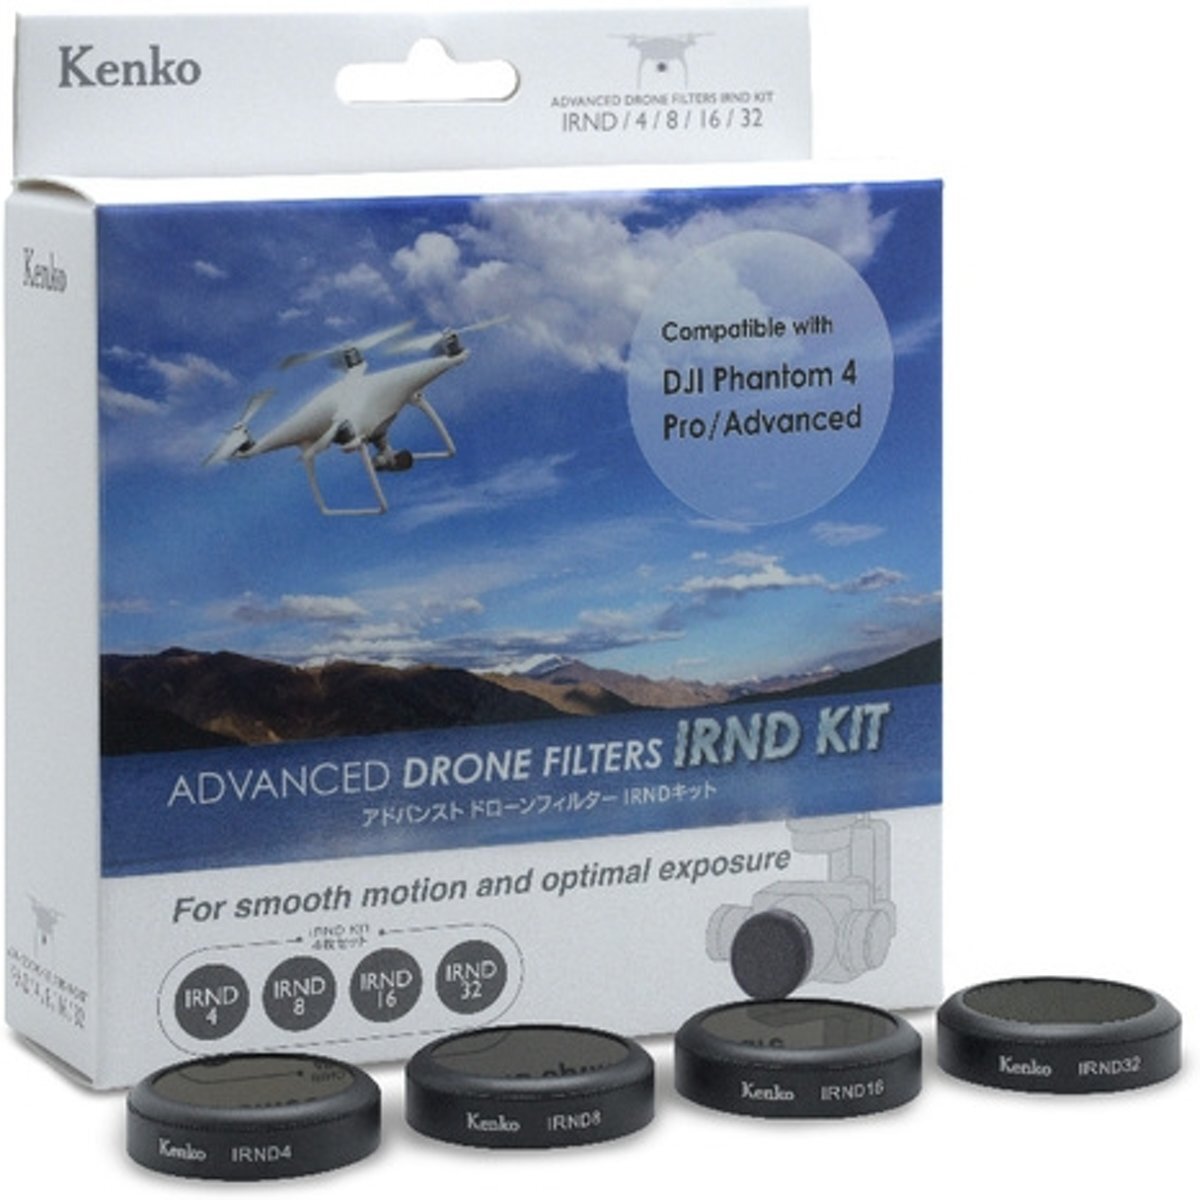 Kenko DJI Phantom 4 Pro/Advanced Filters IRND